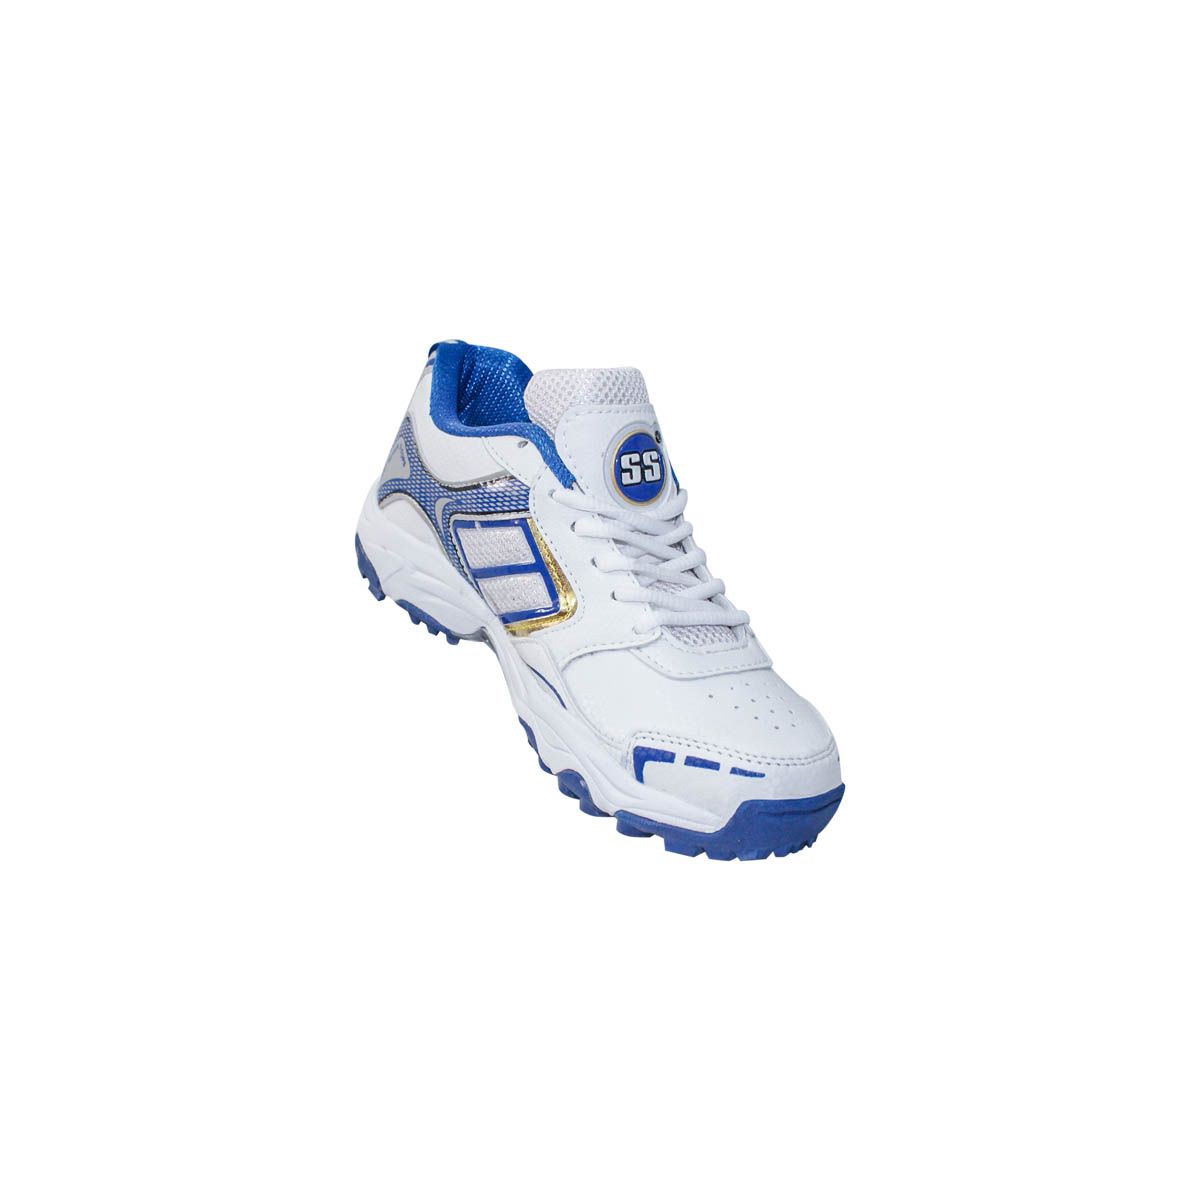 SS Gutsy Cricket Shoes - Blue Golden-Cricket Shoes-Pro Sports